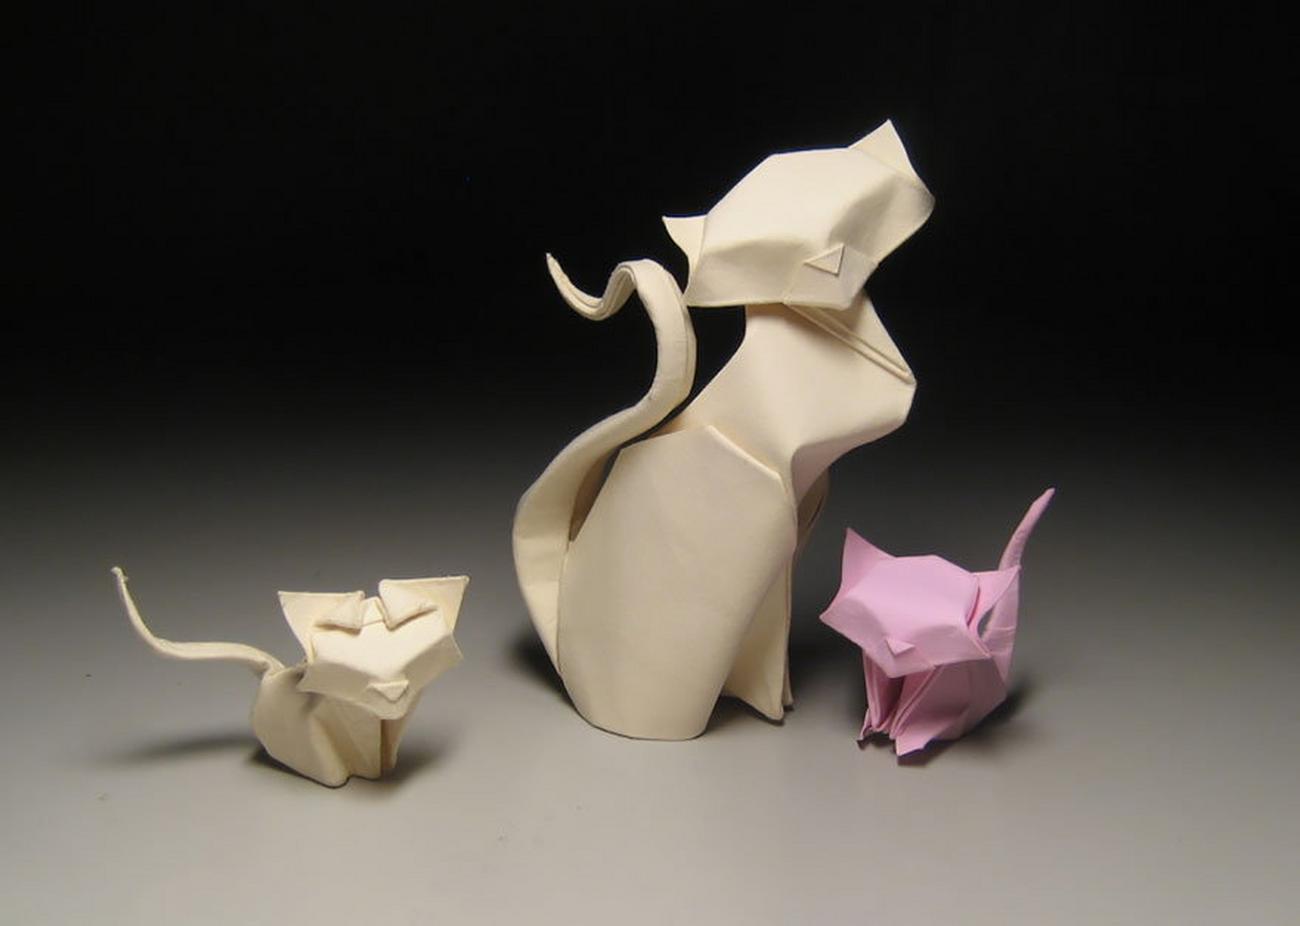 Origami owl by Hoang Tien Quyet